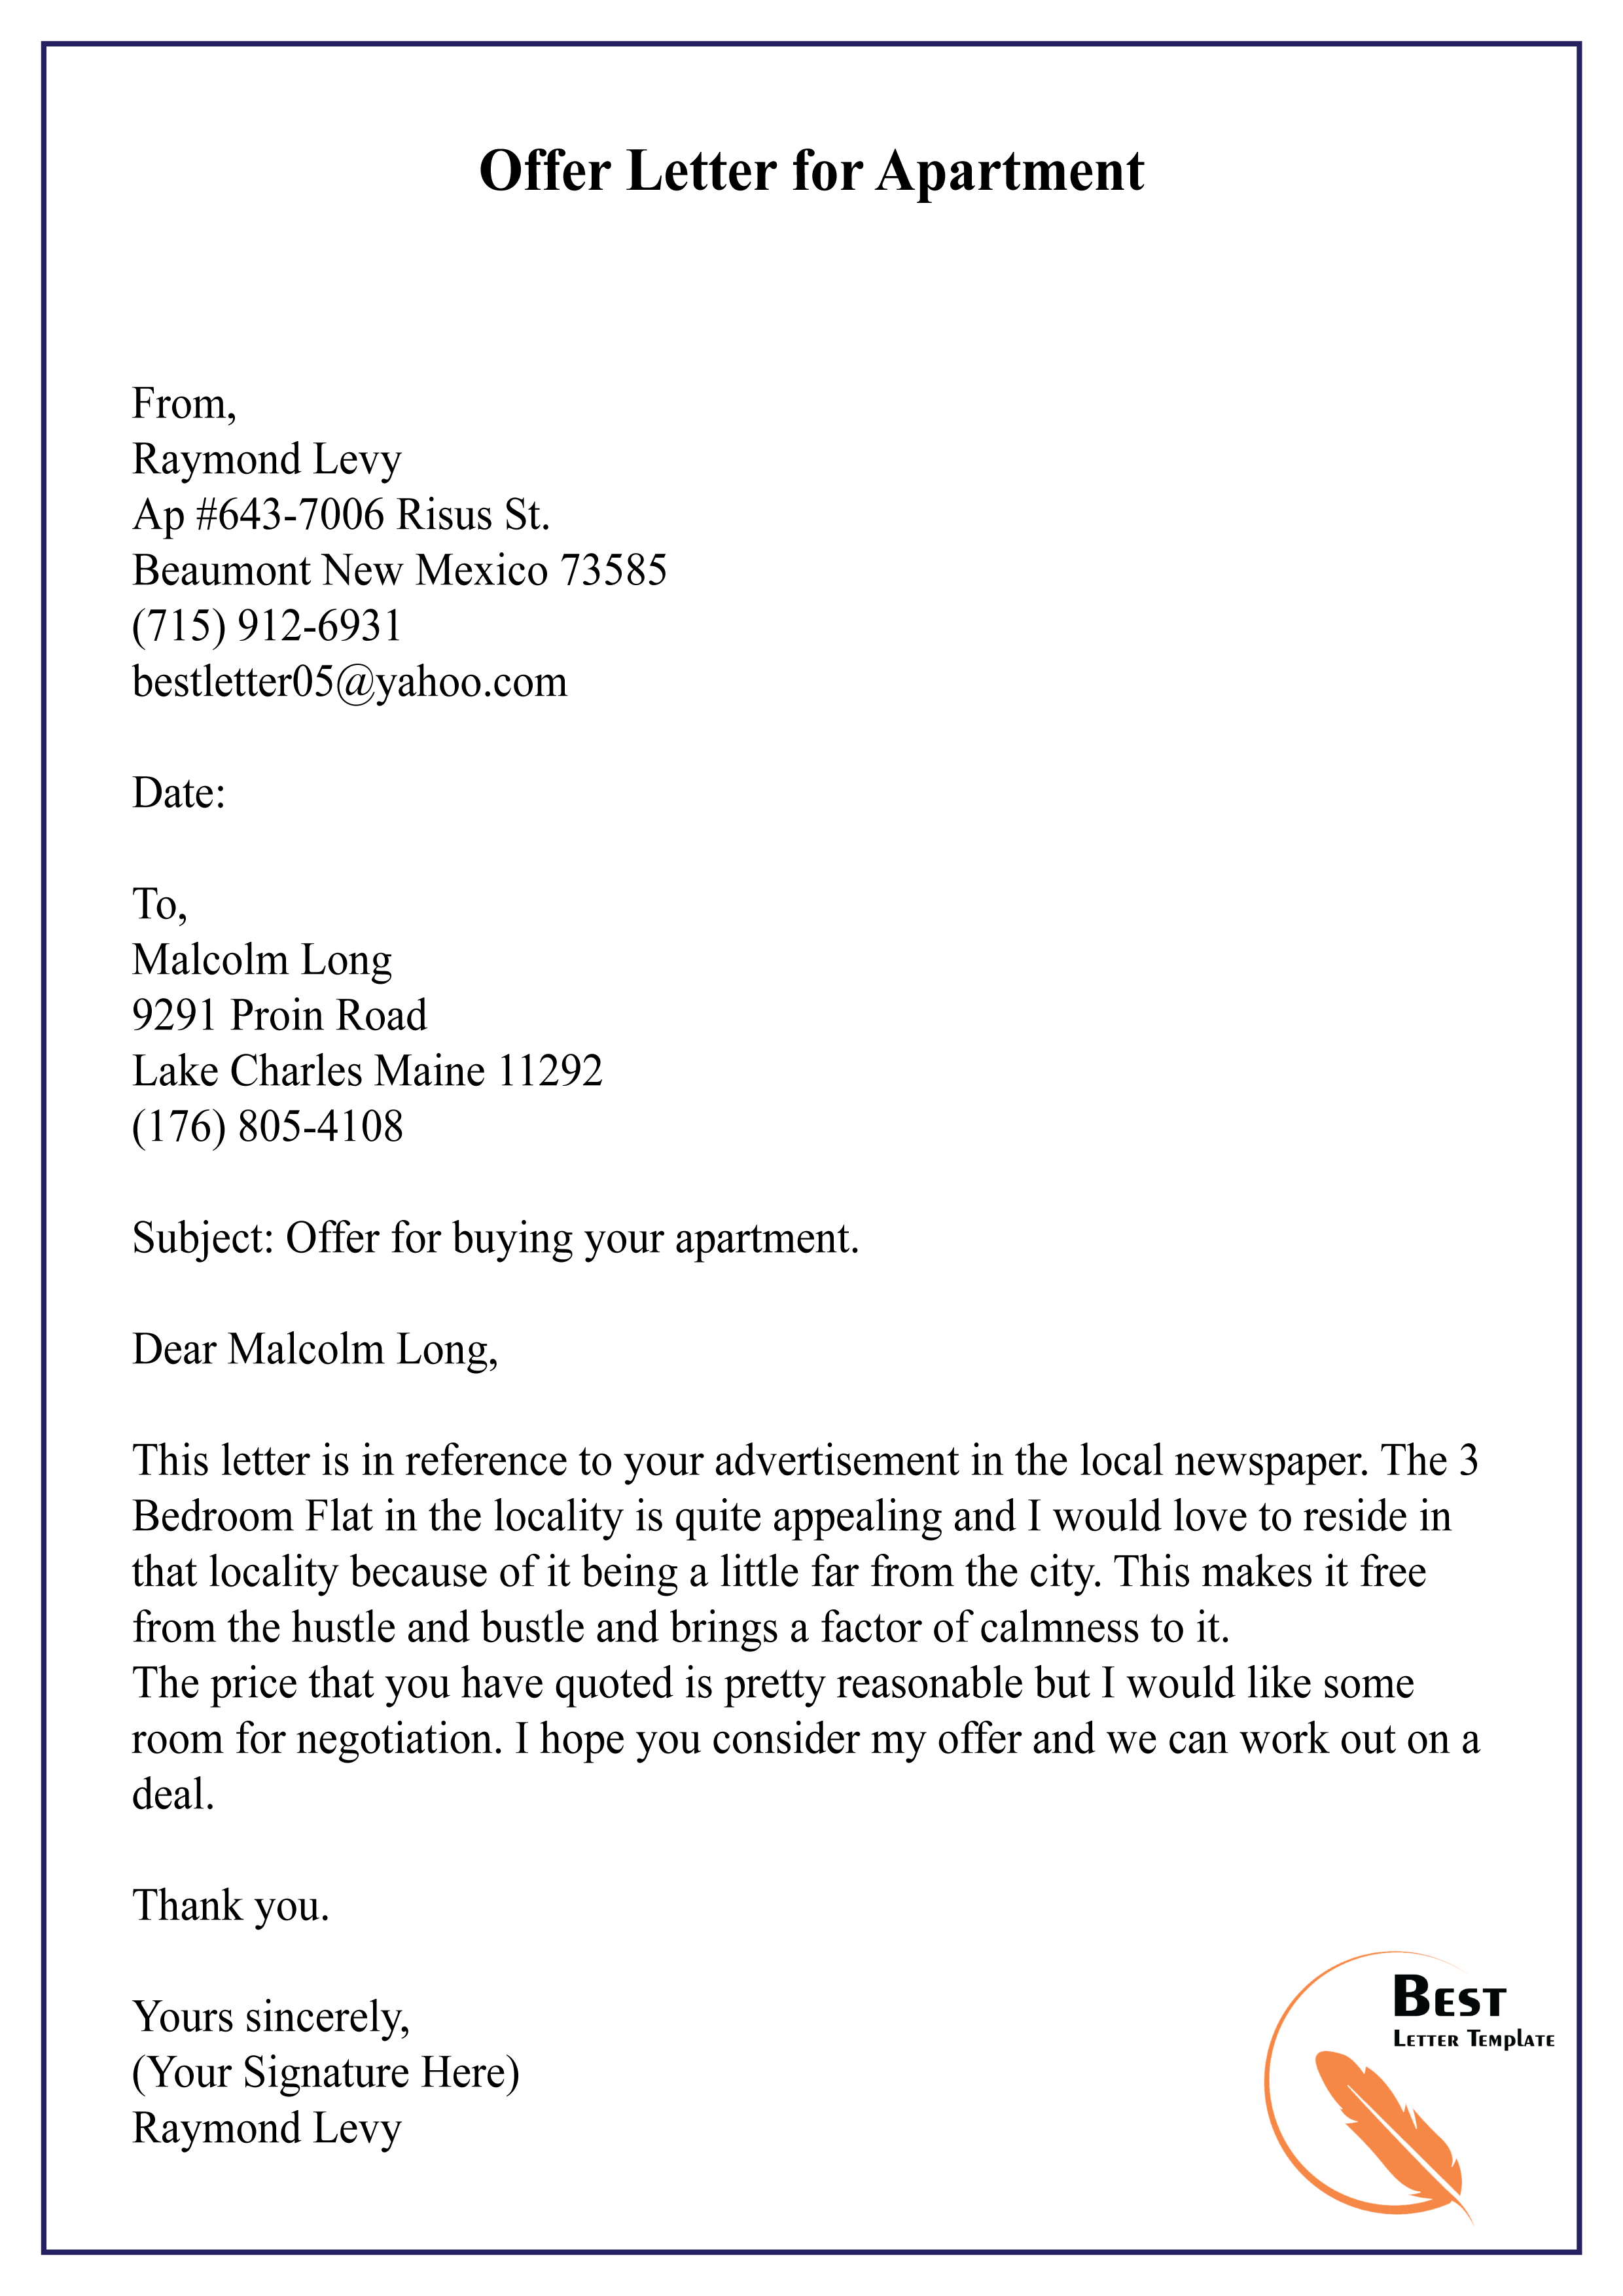 offer-letter-for-apartment-01-best-letter-template